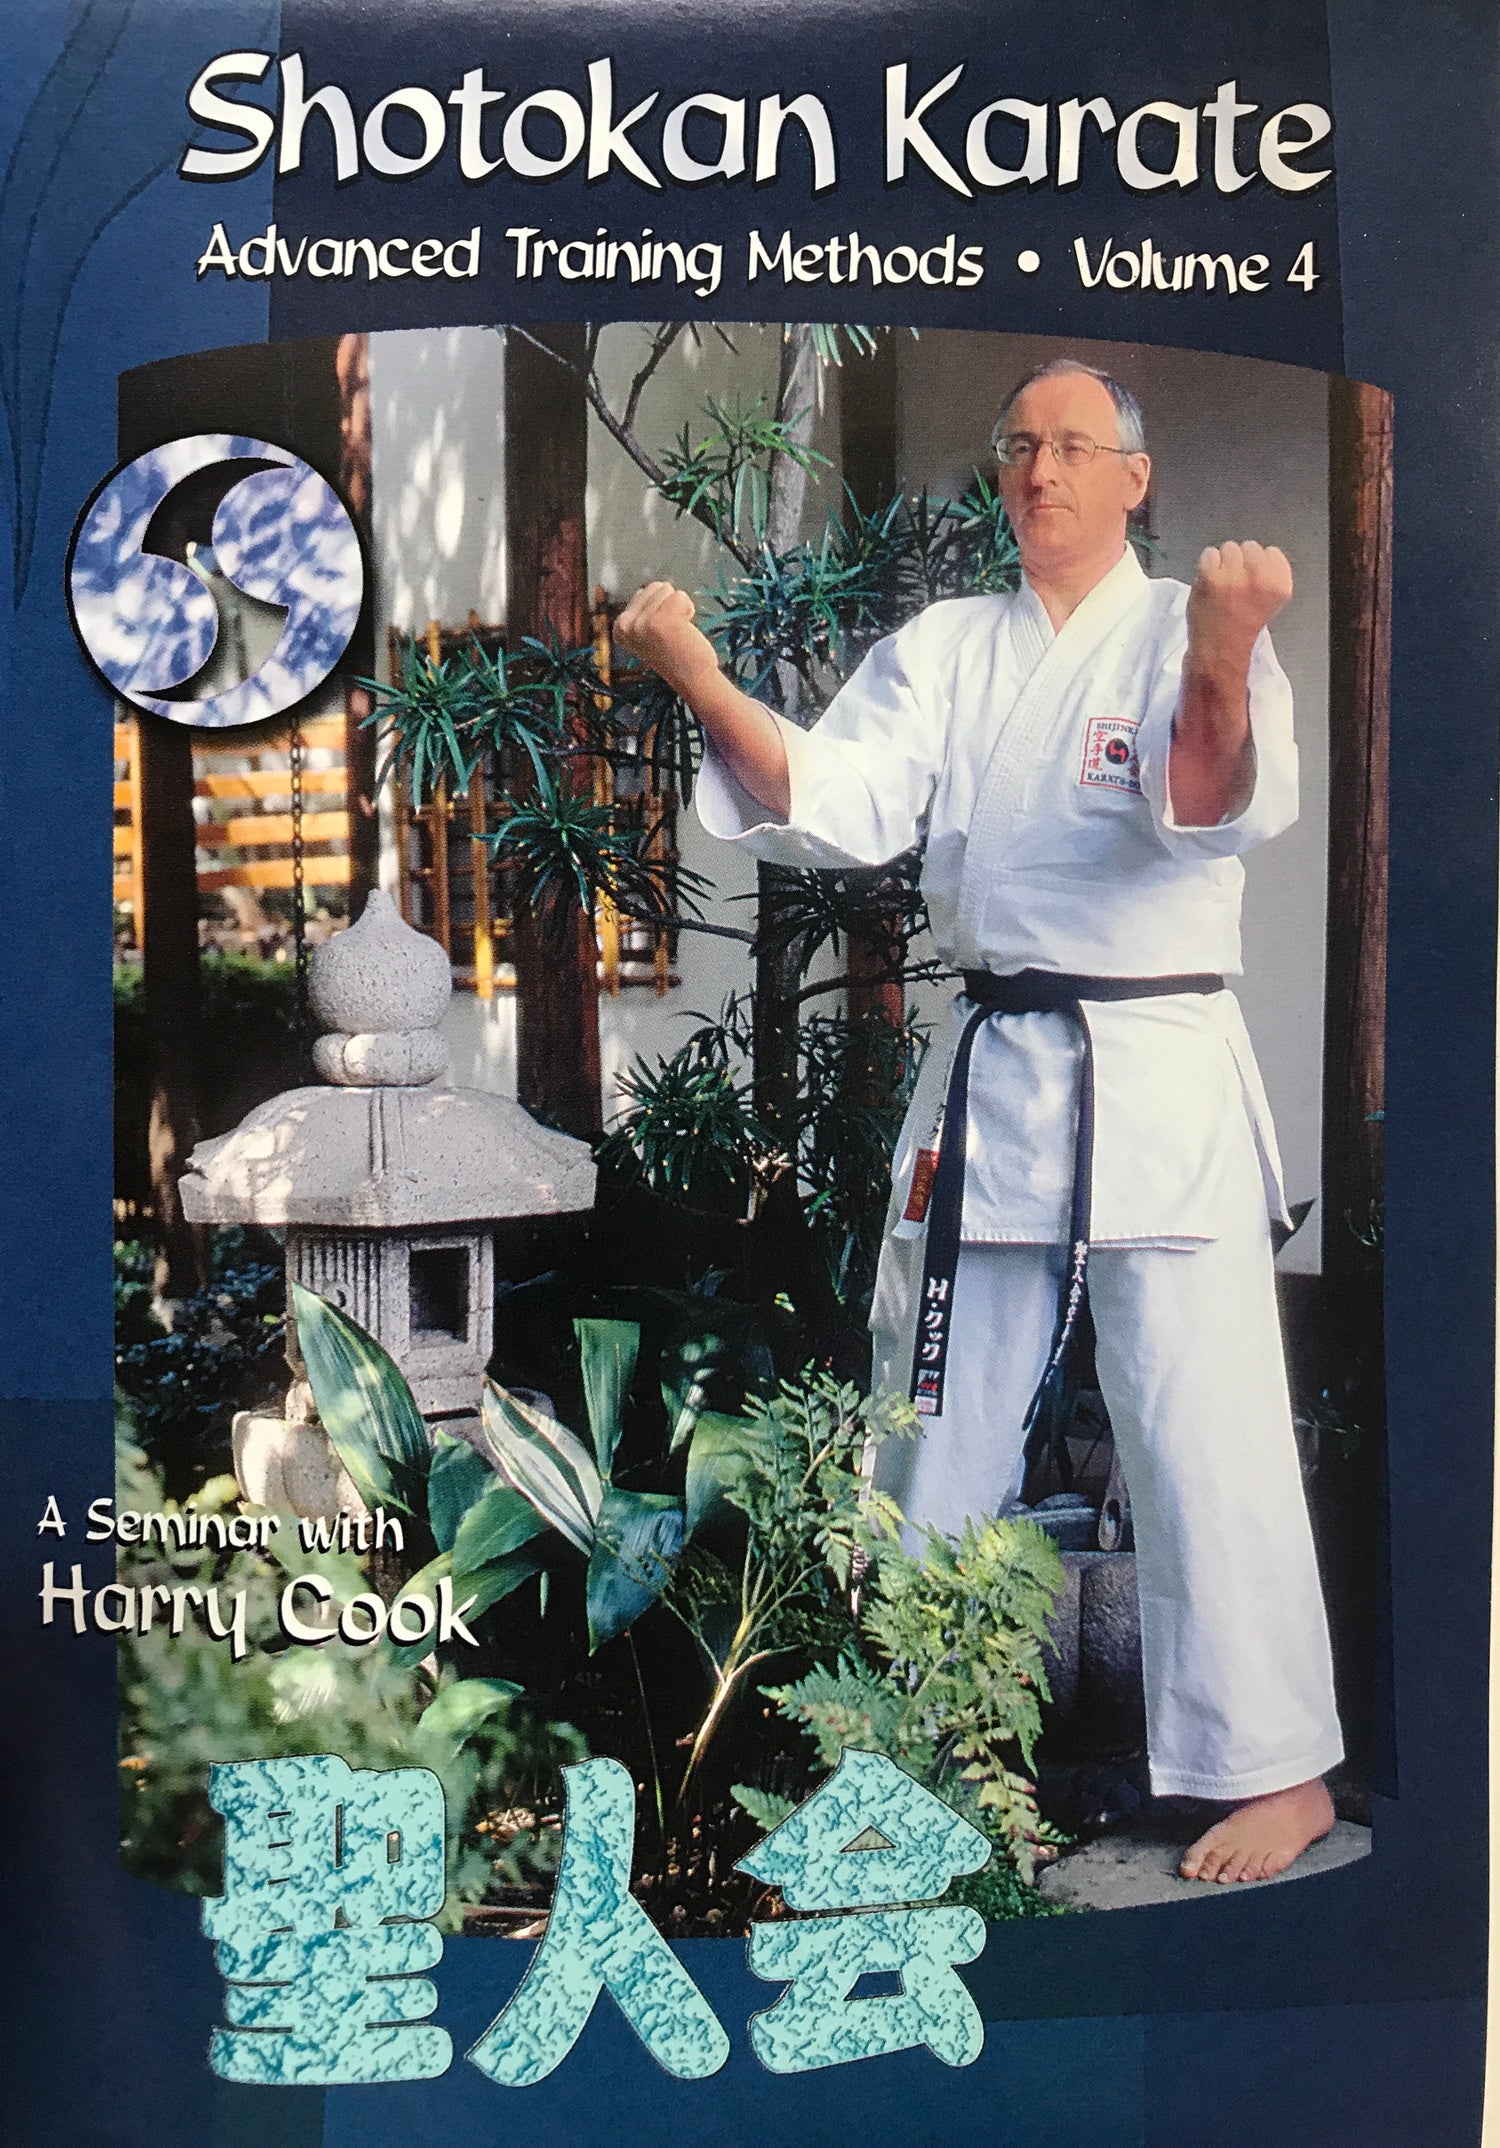 Shotokan Karate New Training Methods with Harry Cook DVD 4 - Budovideos Inc